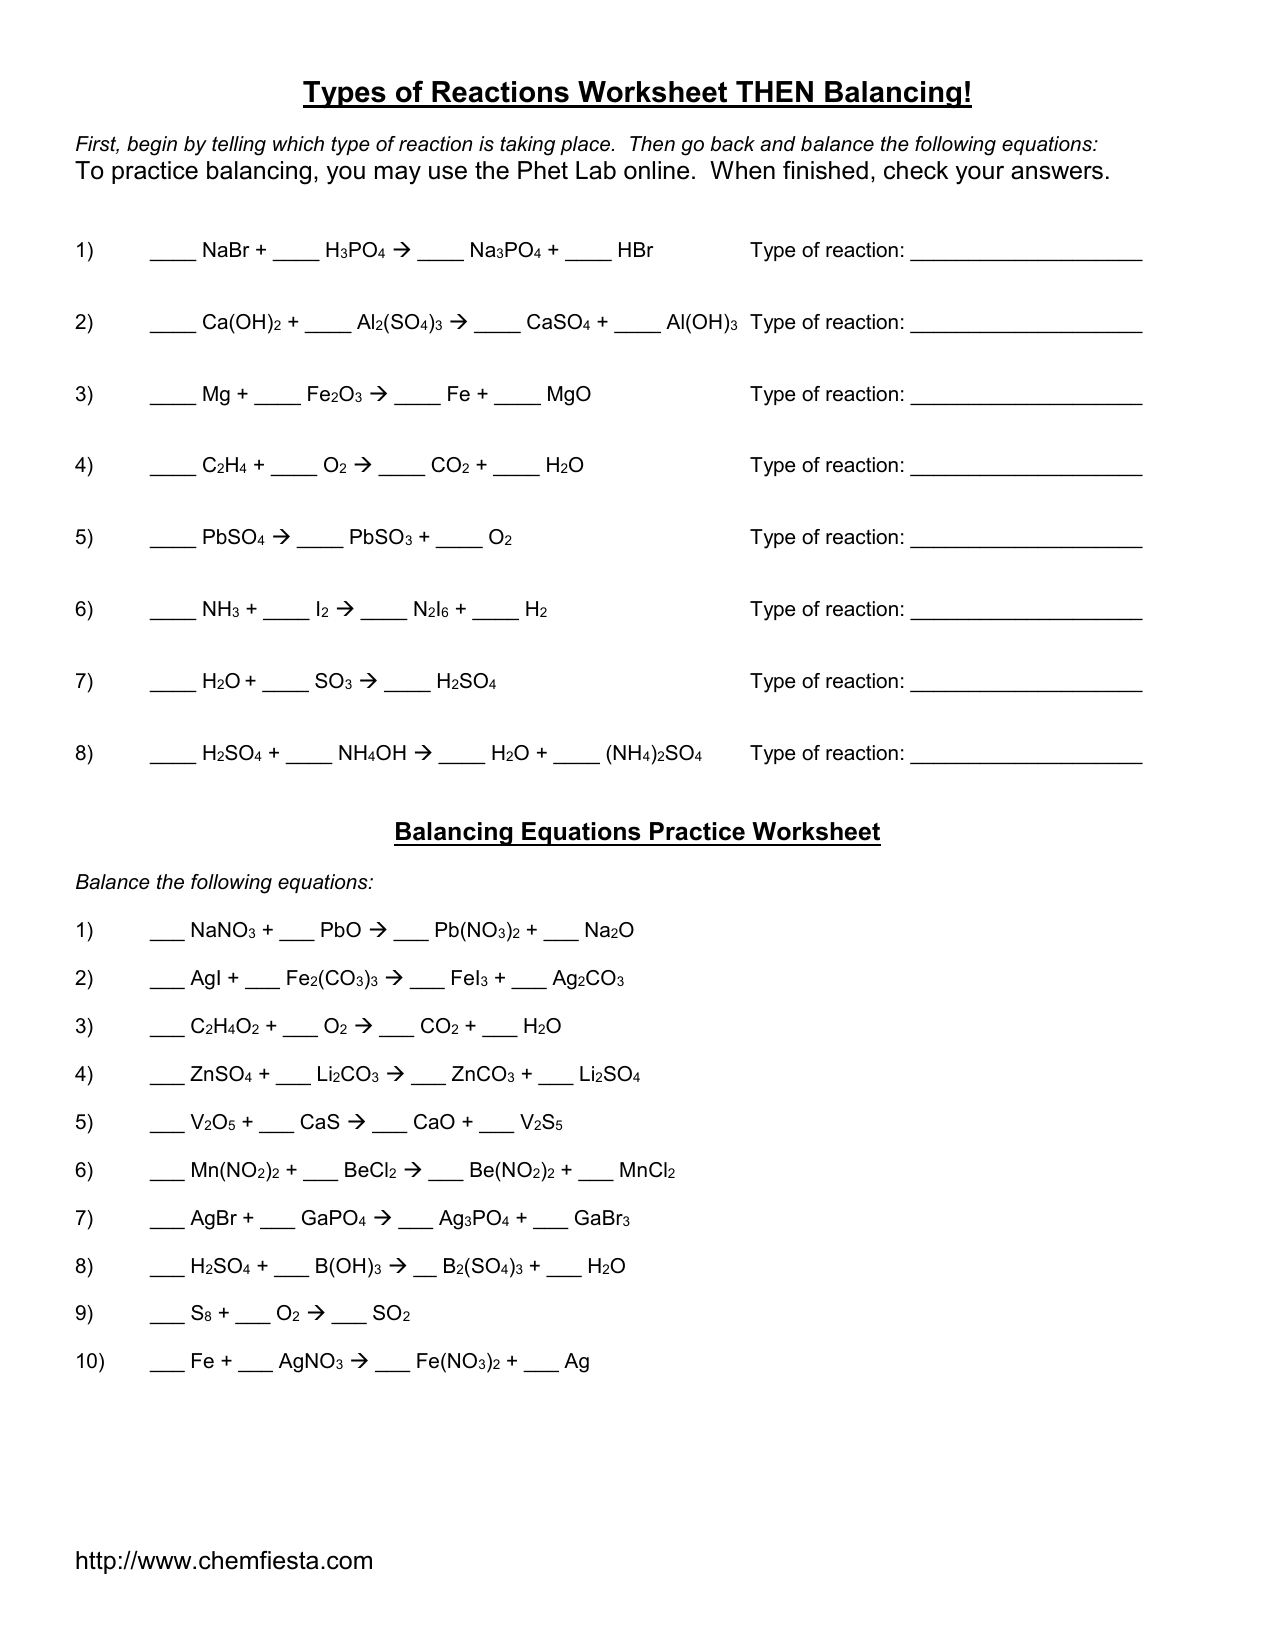 Balancing Equations Practice Worksheet Intended For Balancing Equations Worksheet Answers